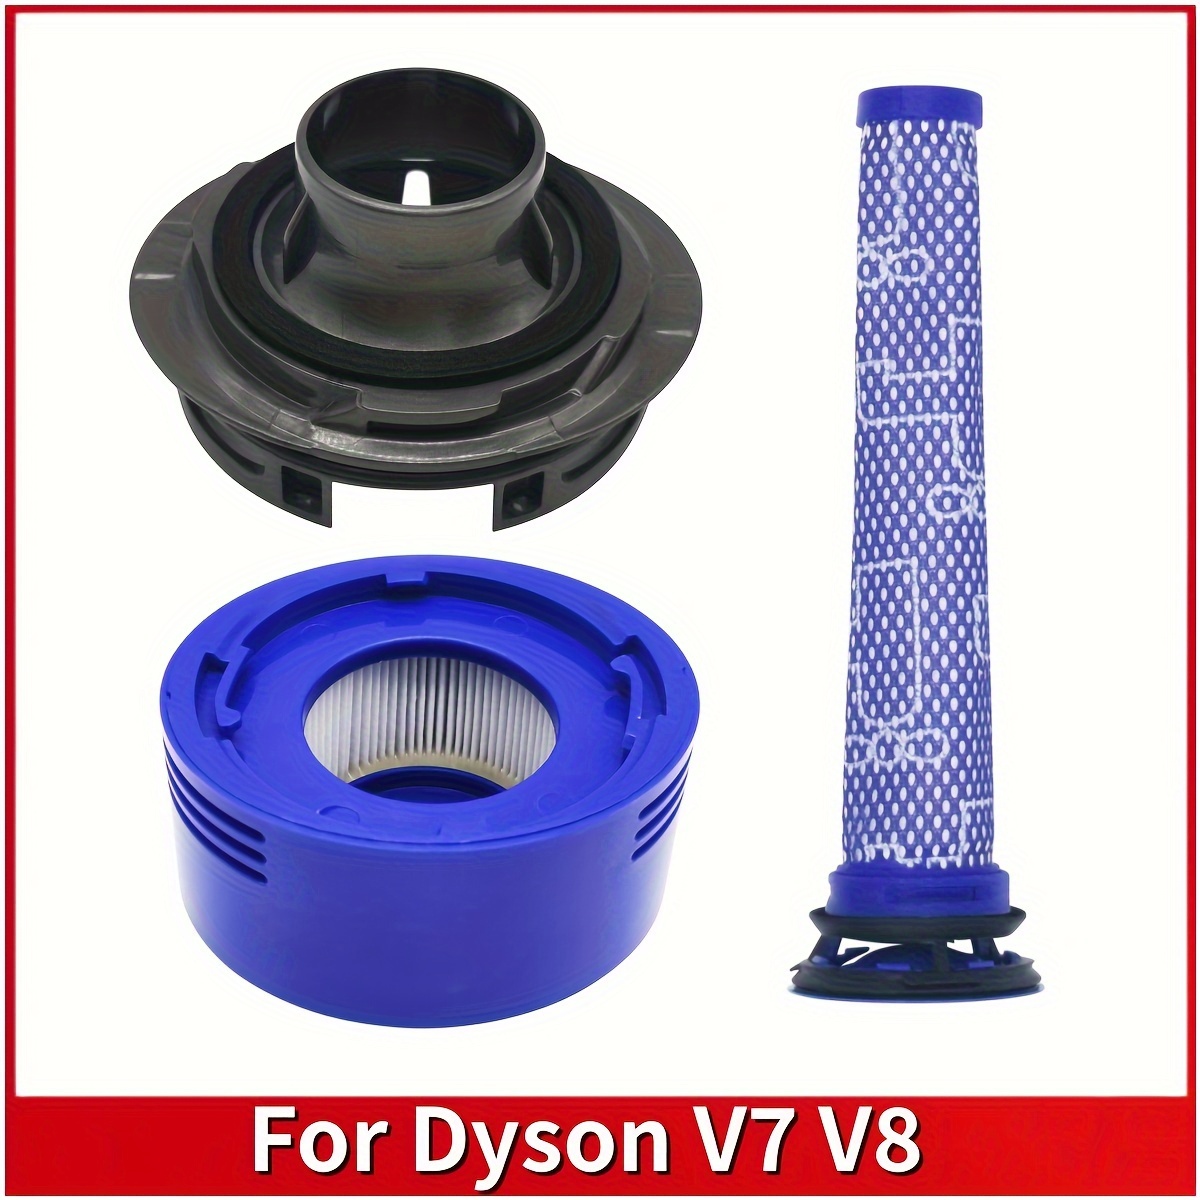  Filter Replacements for Dyson V15,V12,Filters Compatible with Dyson  V15 Detect,Detect+,V12 Detect,Nautik,V11 Torque Drive,V11 Animal Vacuum  Cleaner,Blue,2-Pack : Home & Kitchen